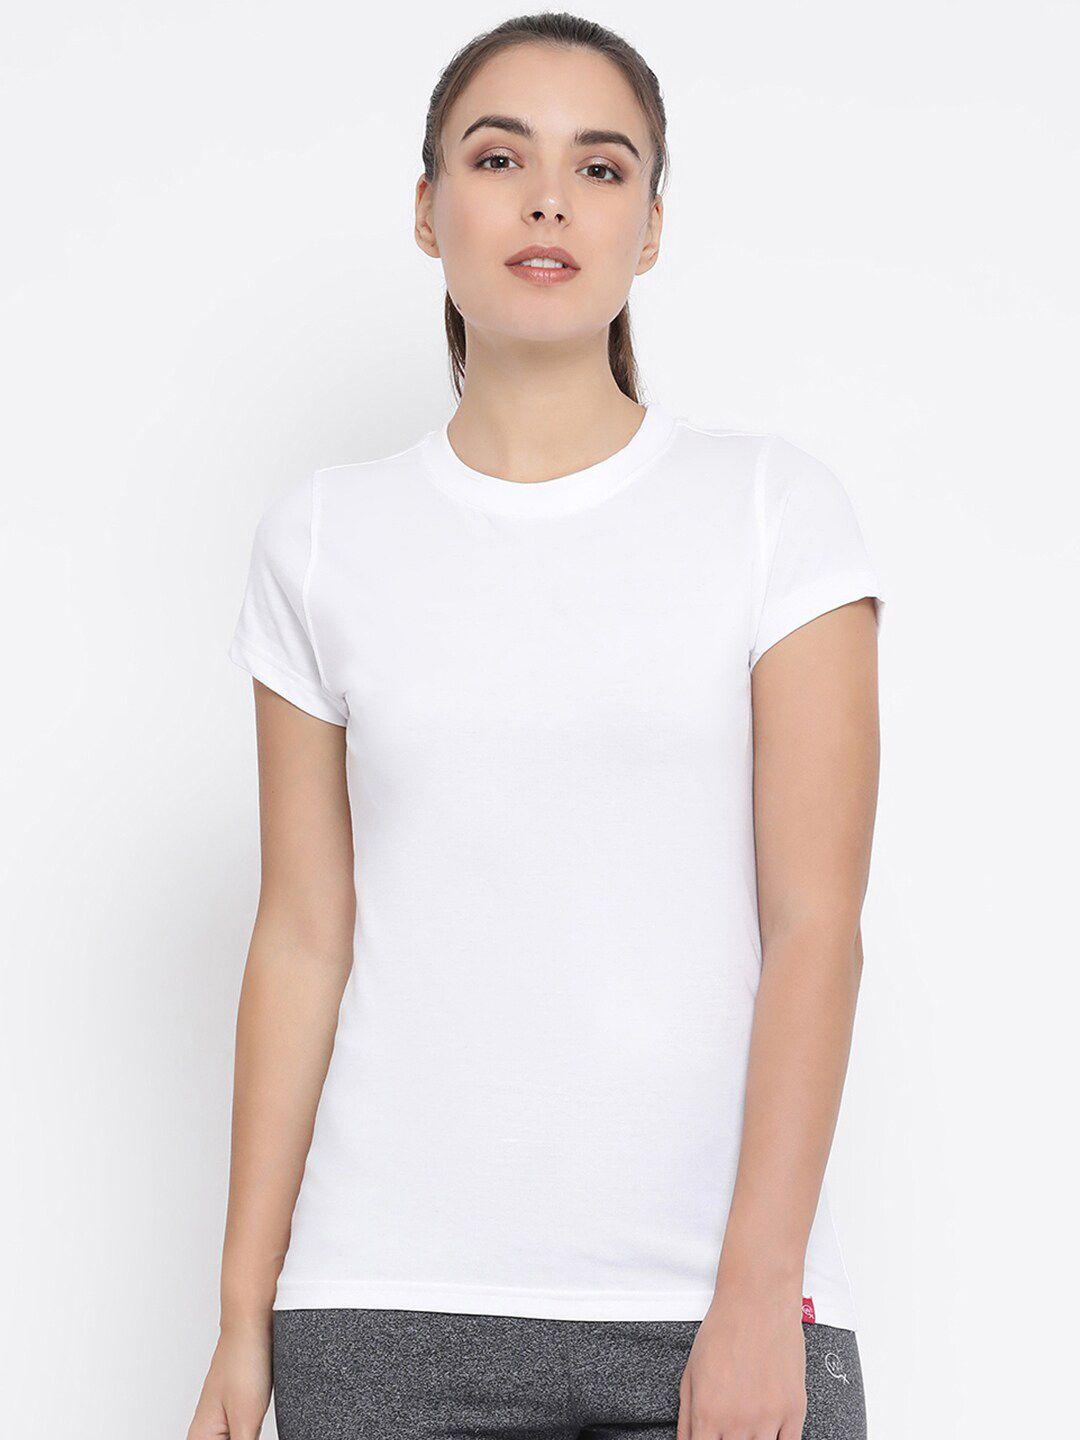 macrowoman w-series round neck pure cotton sport t-shirt